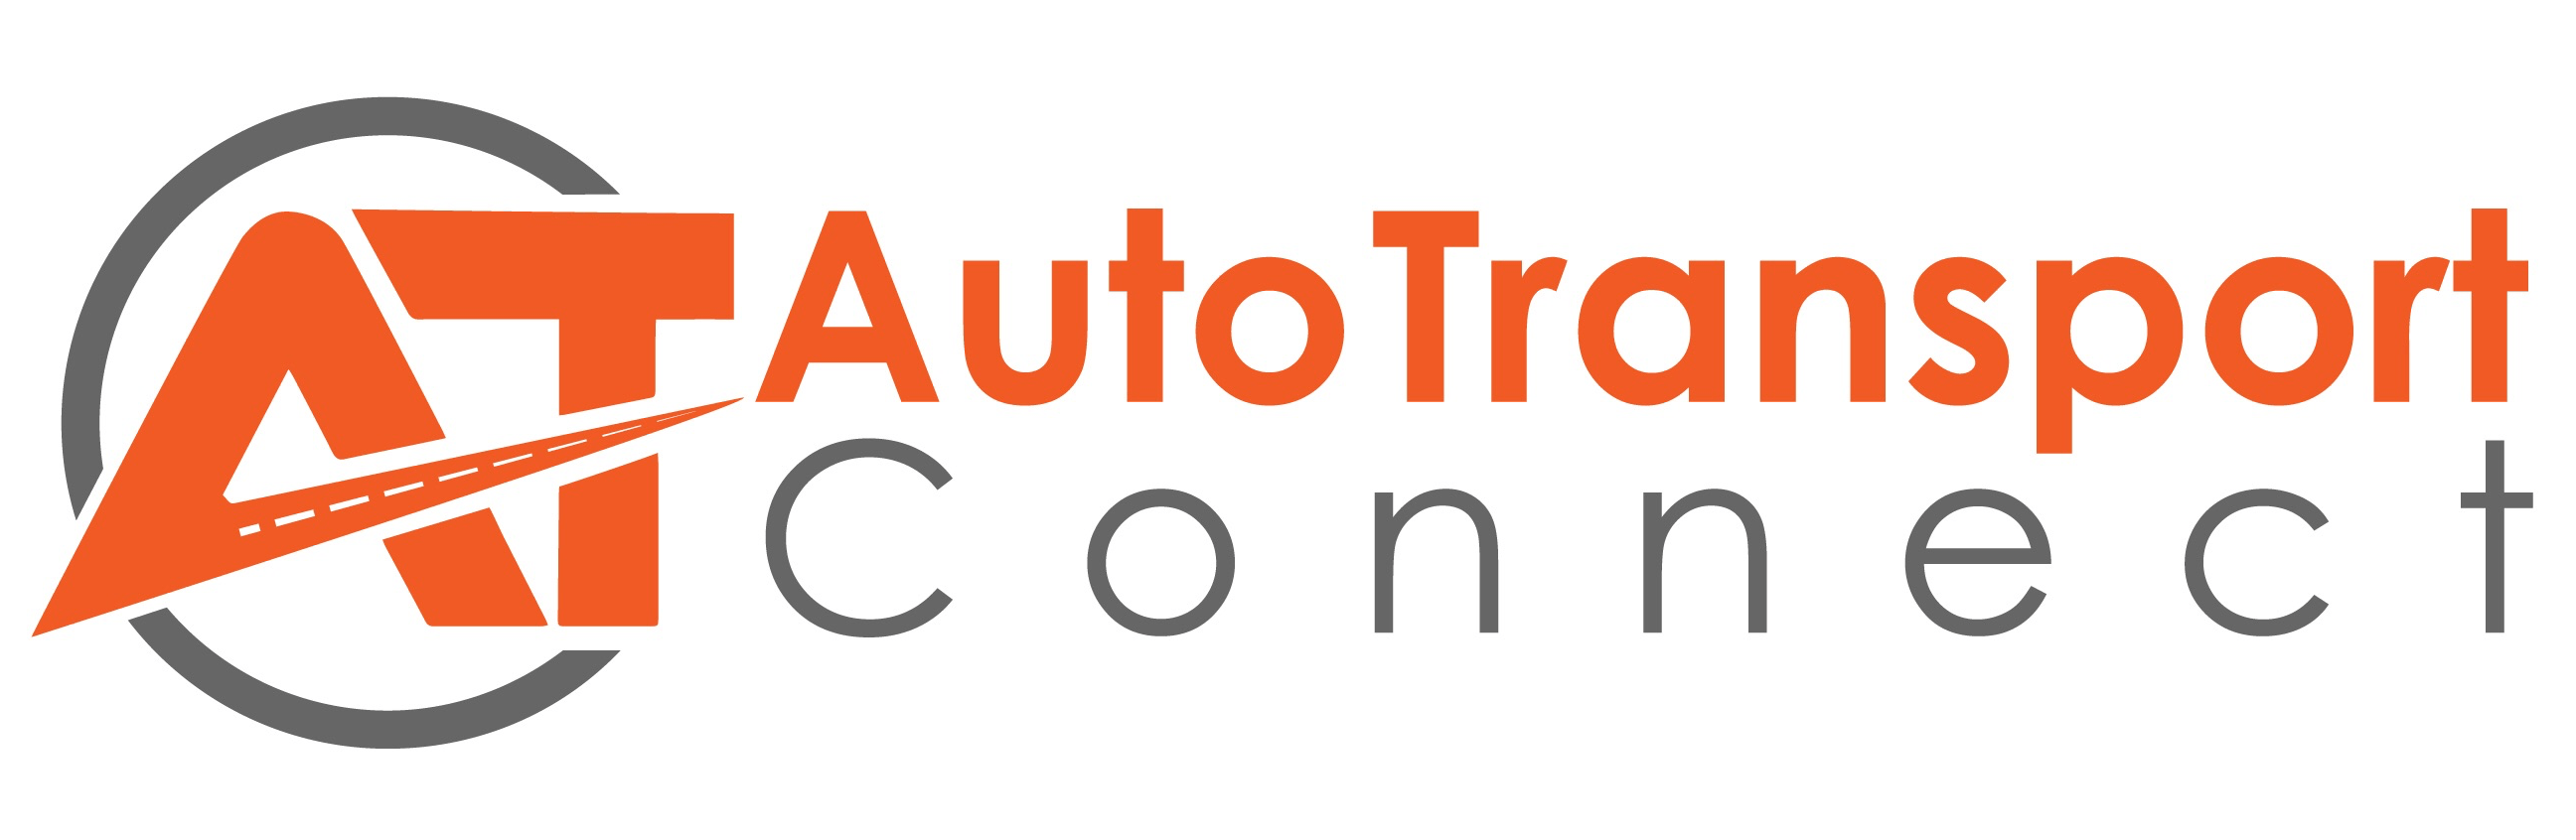 Auto Transport Logo - Auto Transport Connect